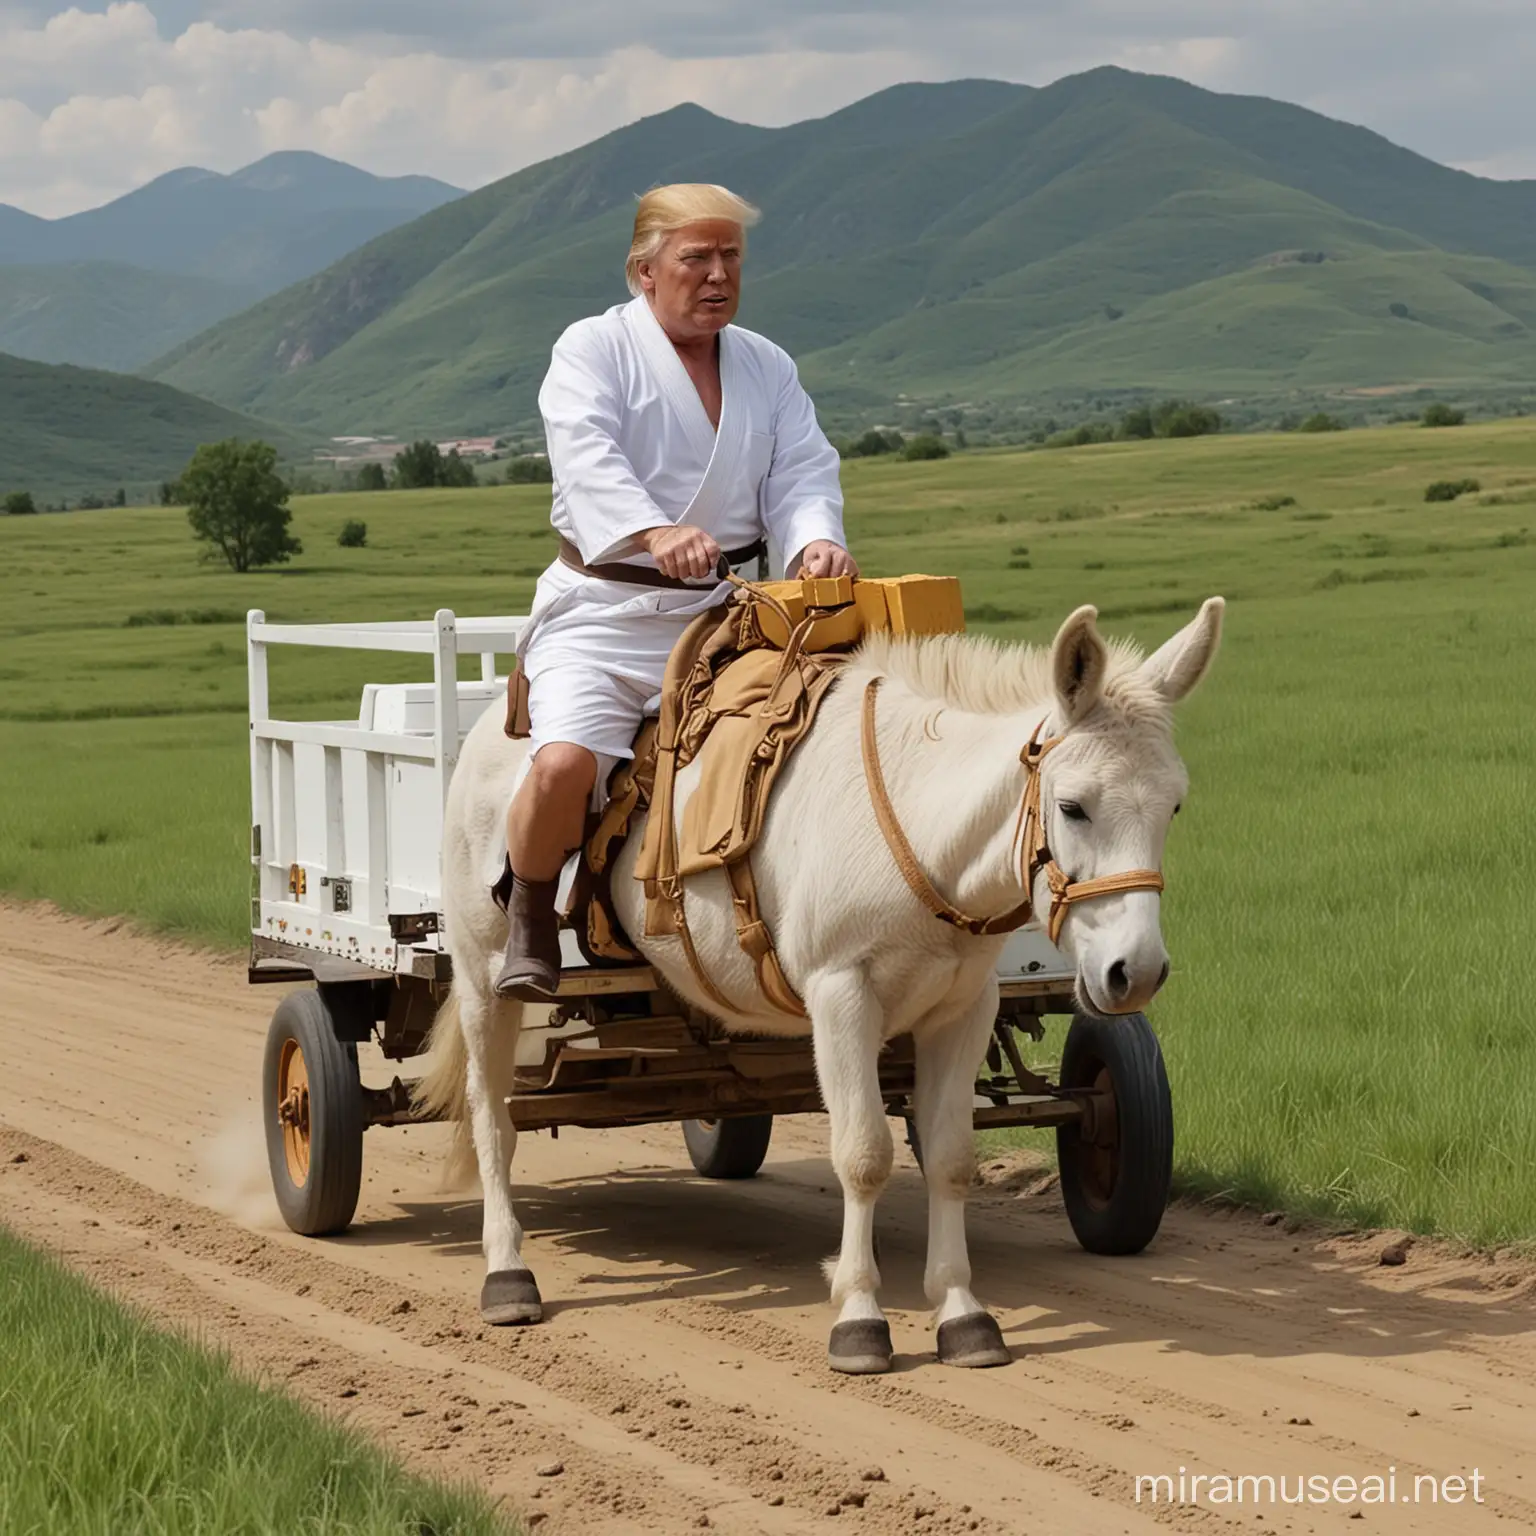 Senior Donald Trump in Judo Gear Driving Donkey with Golden Bricks